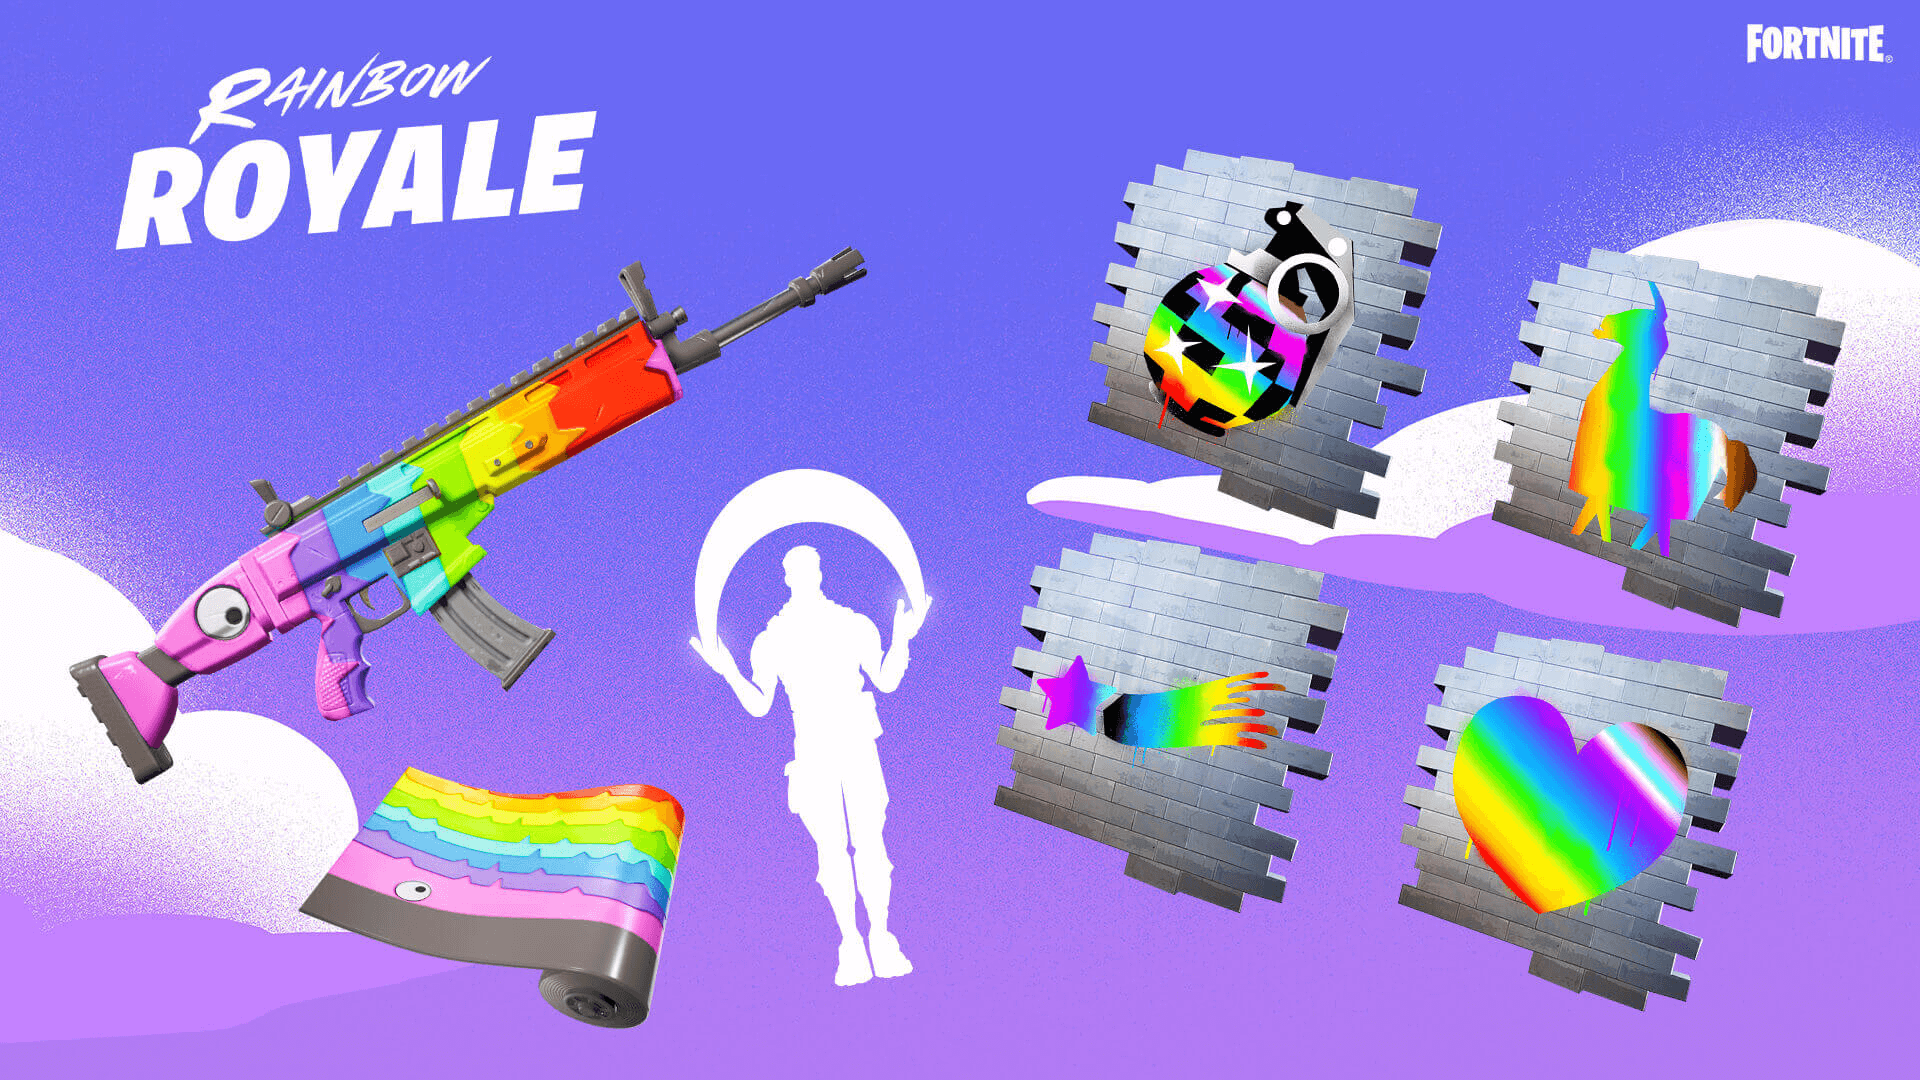 Rainbow Royale returns to the Fortnite Item Shop